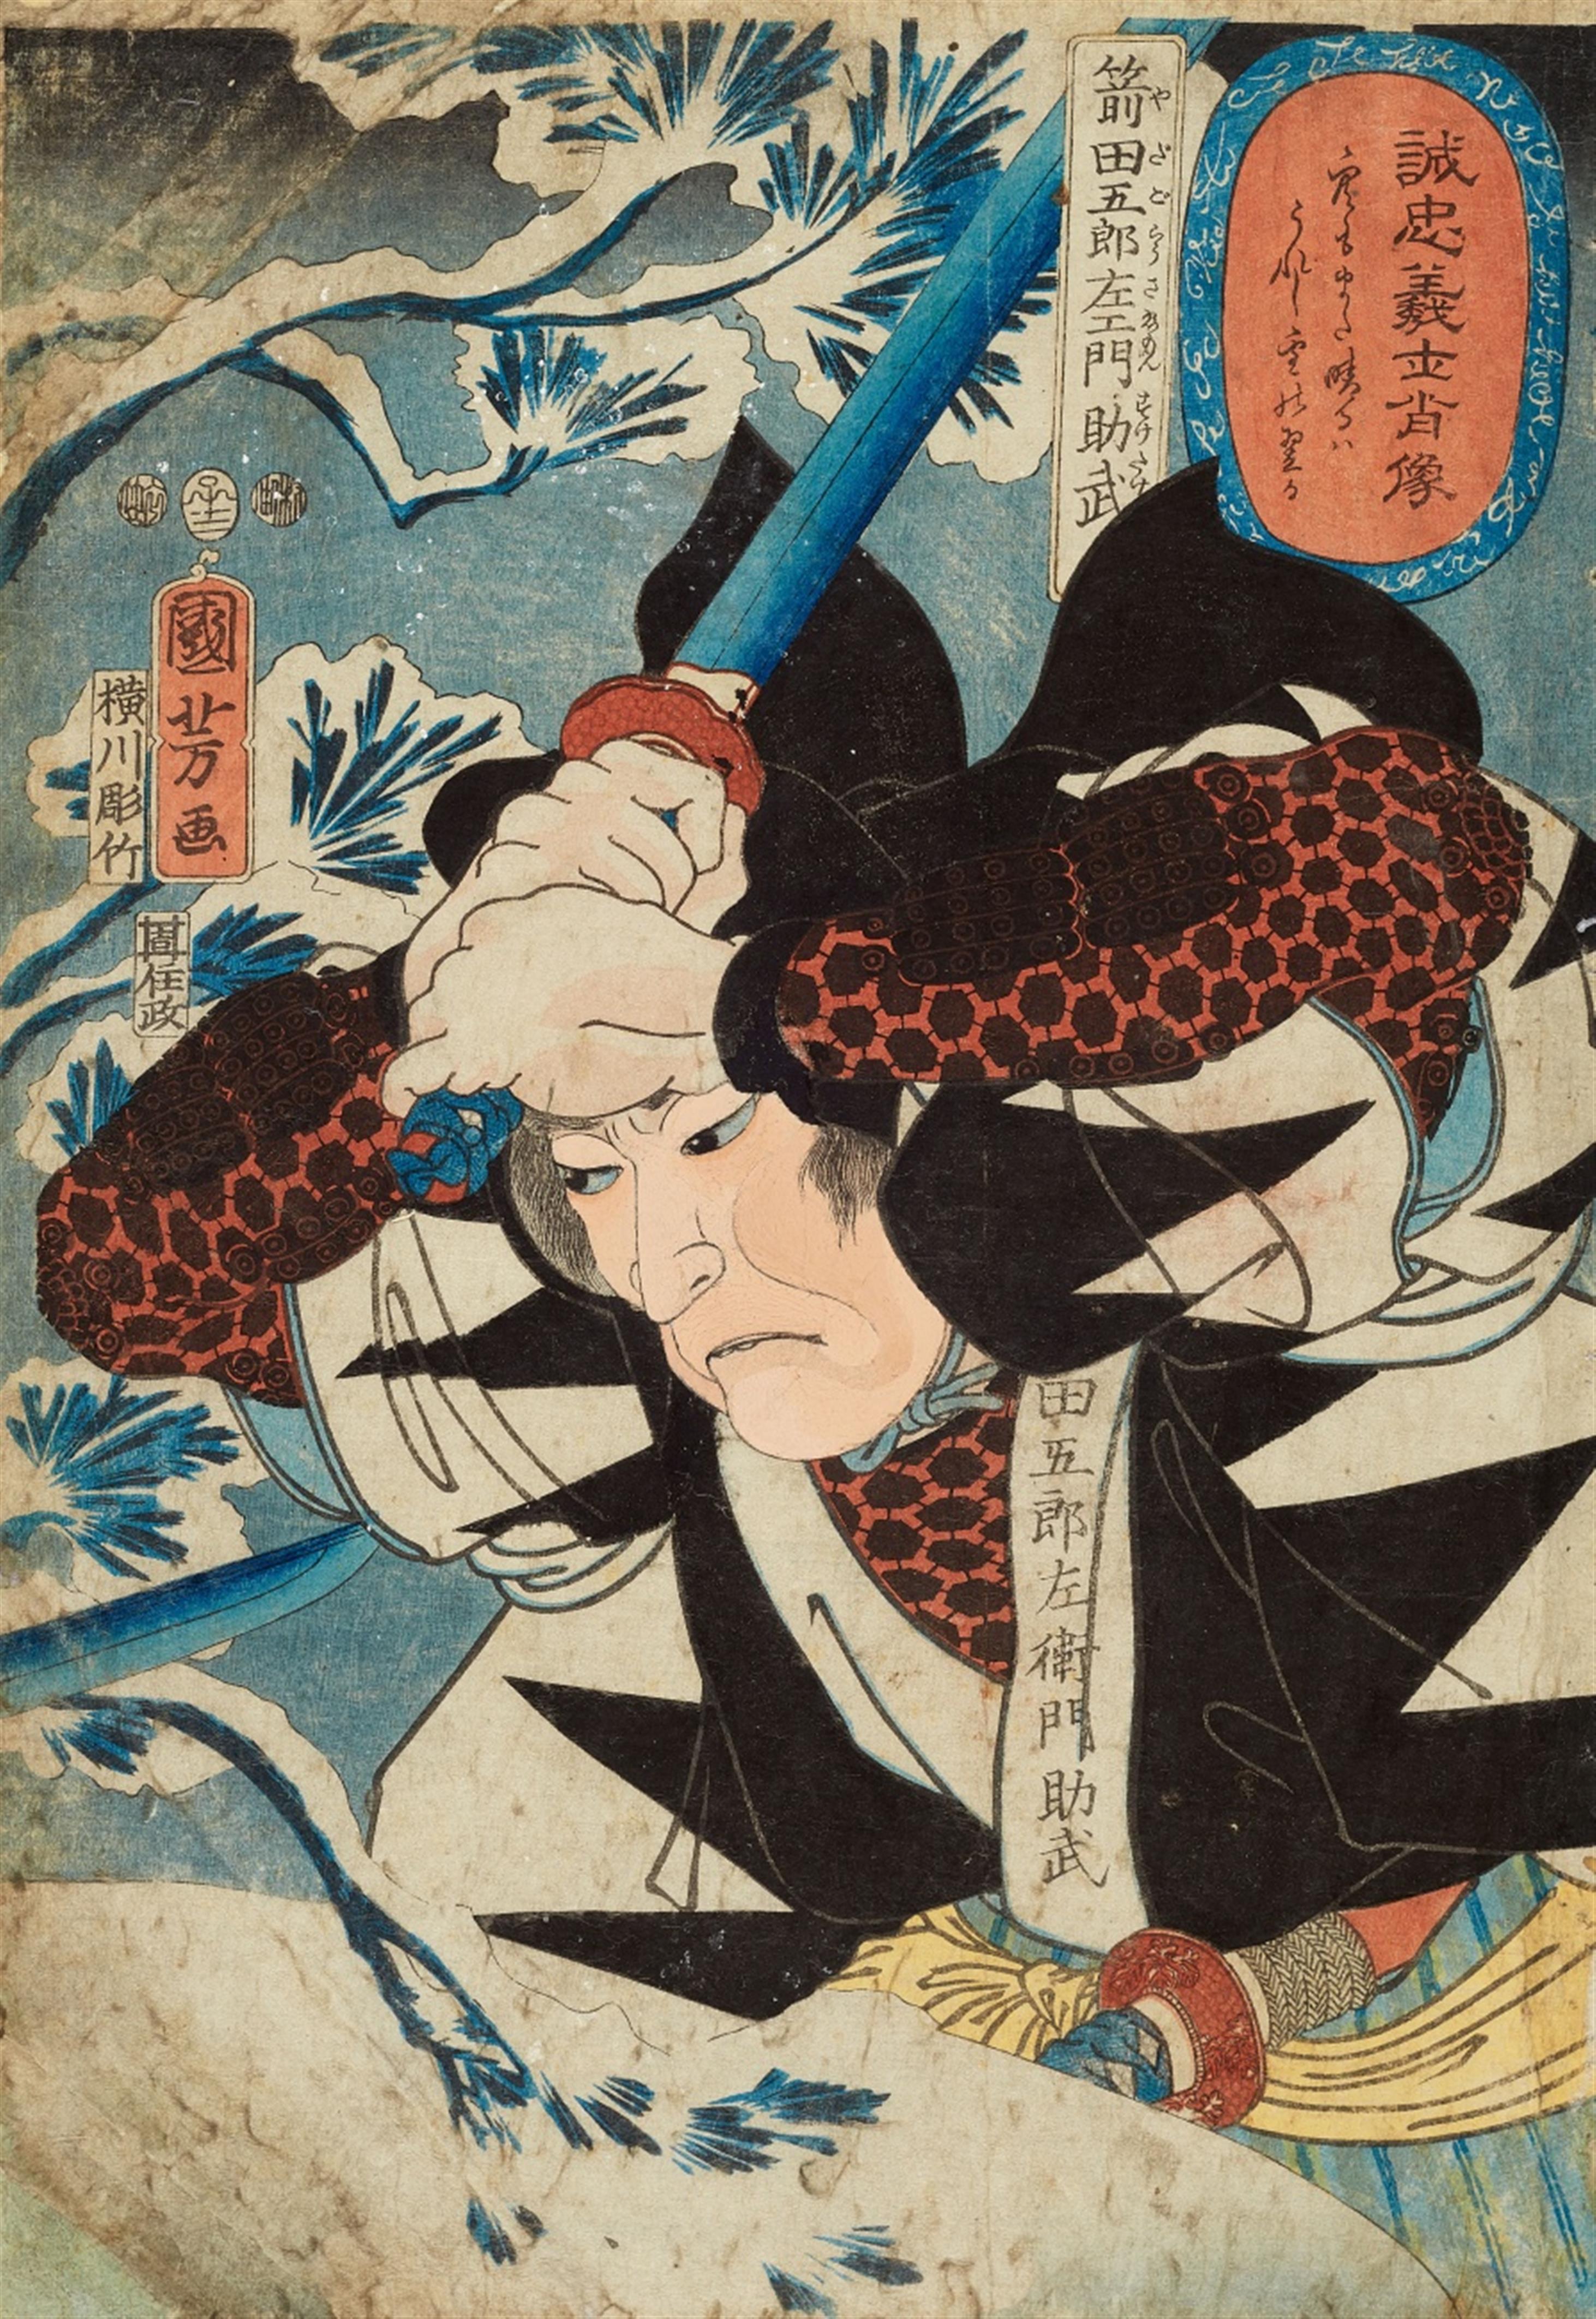 Utagawa Kuniyoshi - Utagawa Kuniyoshi (1798-1861) - image-4